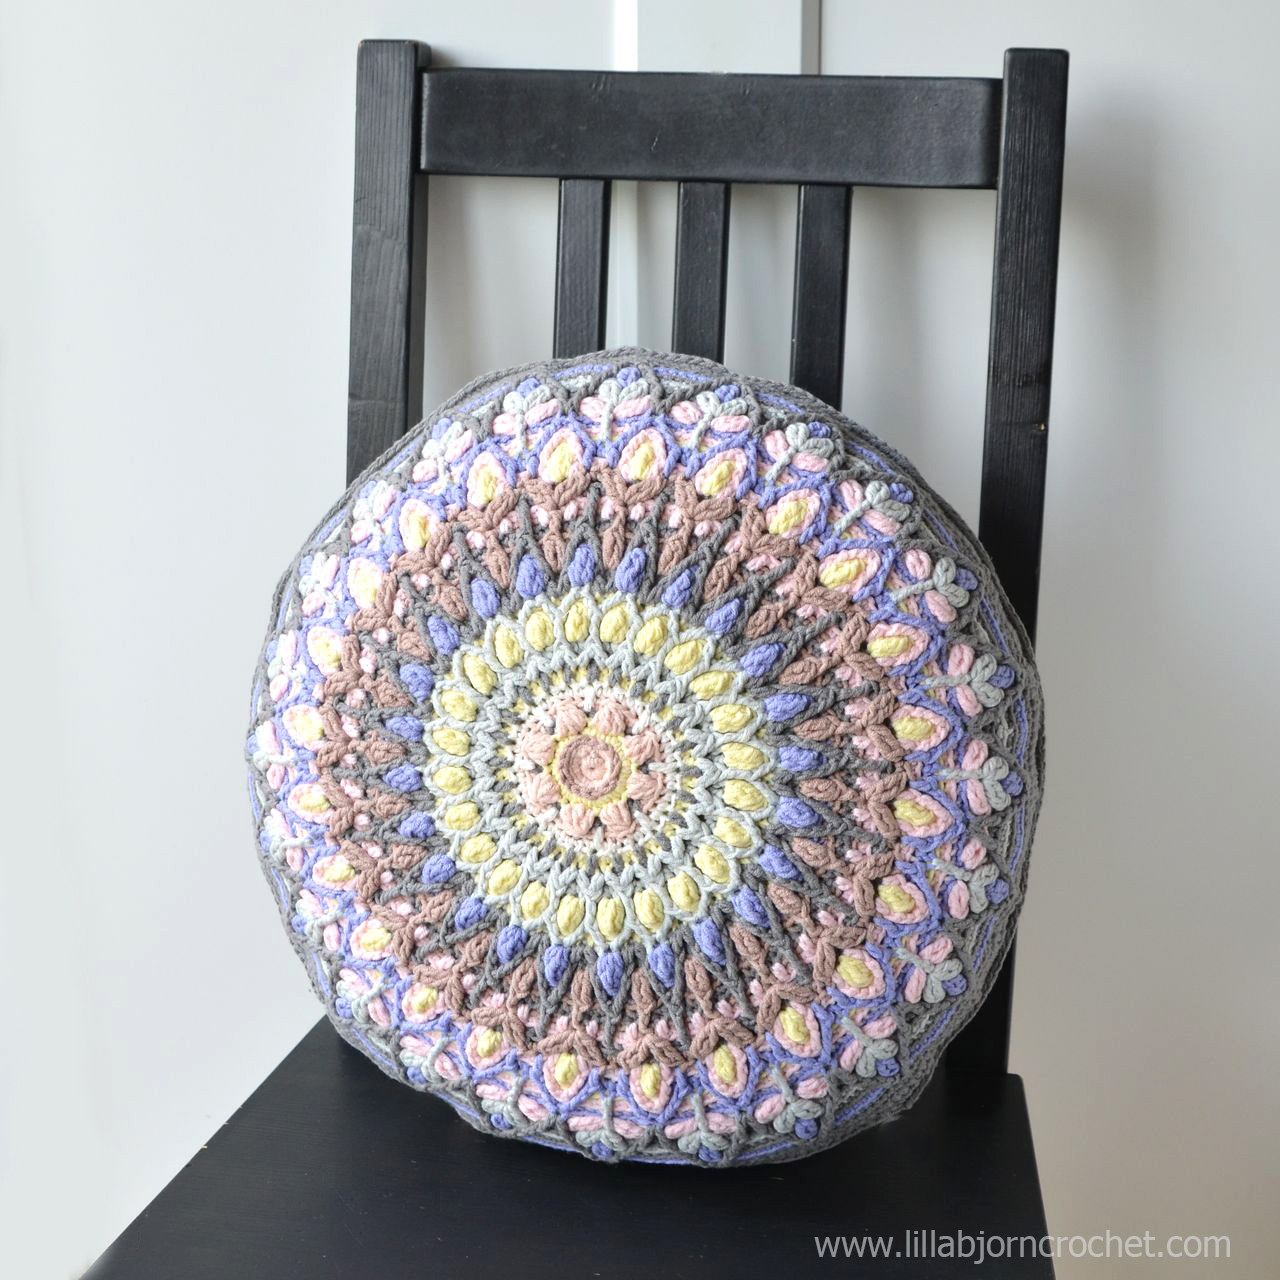 Spanish Mandala was inspired by ceramic handmade plates. Overlay crochet pattern by Lilla Bjorn Crochet